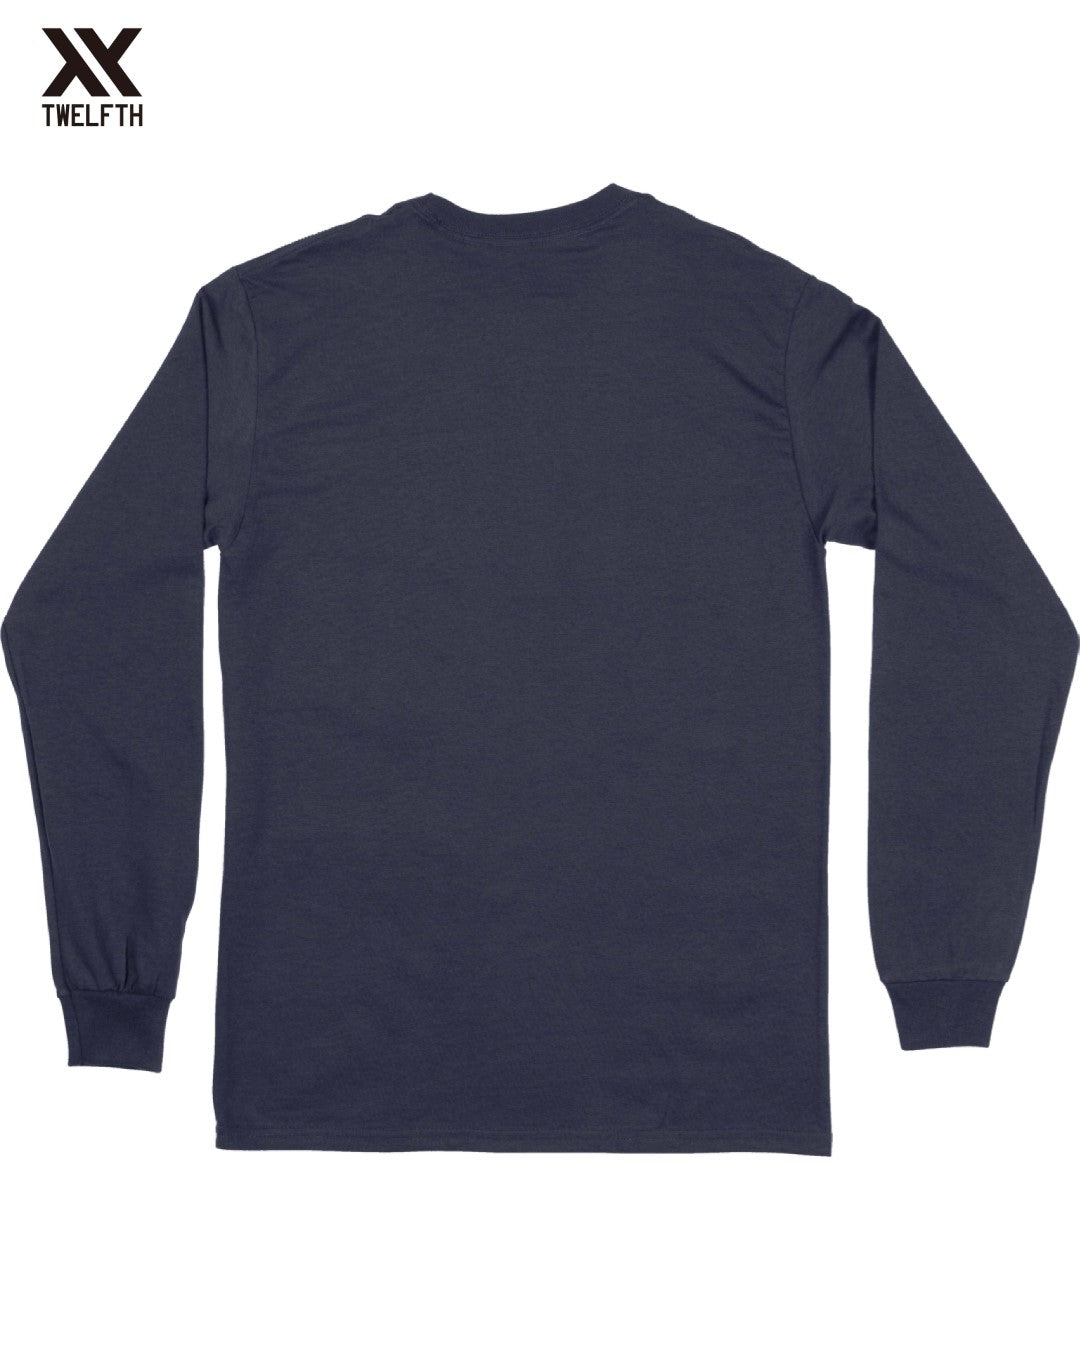 Arsenal Crest T-Shirt - Mens - Long Sleeve